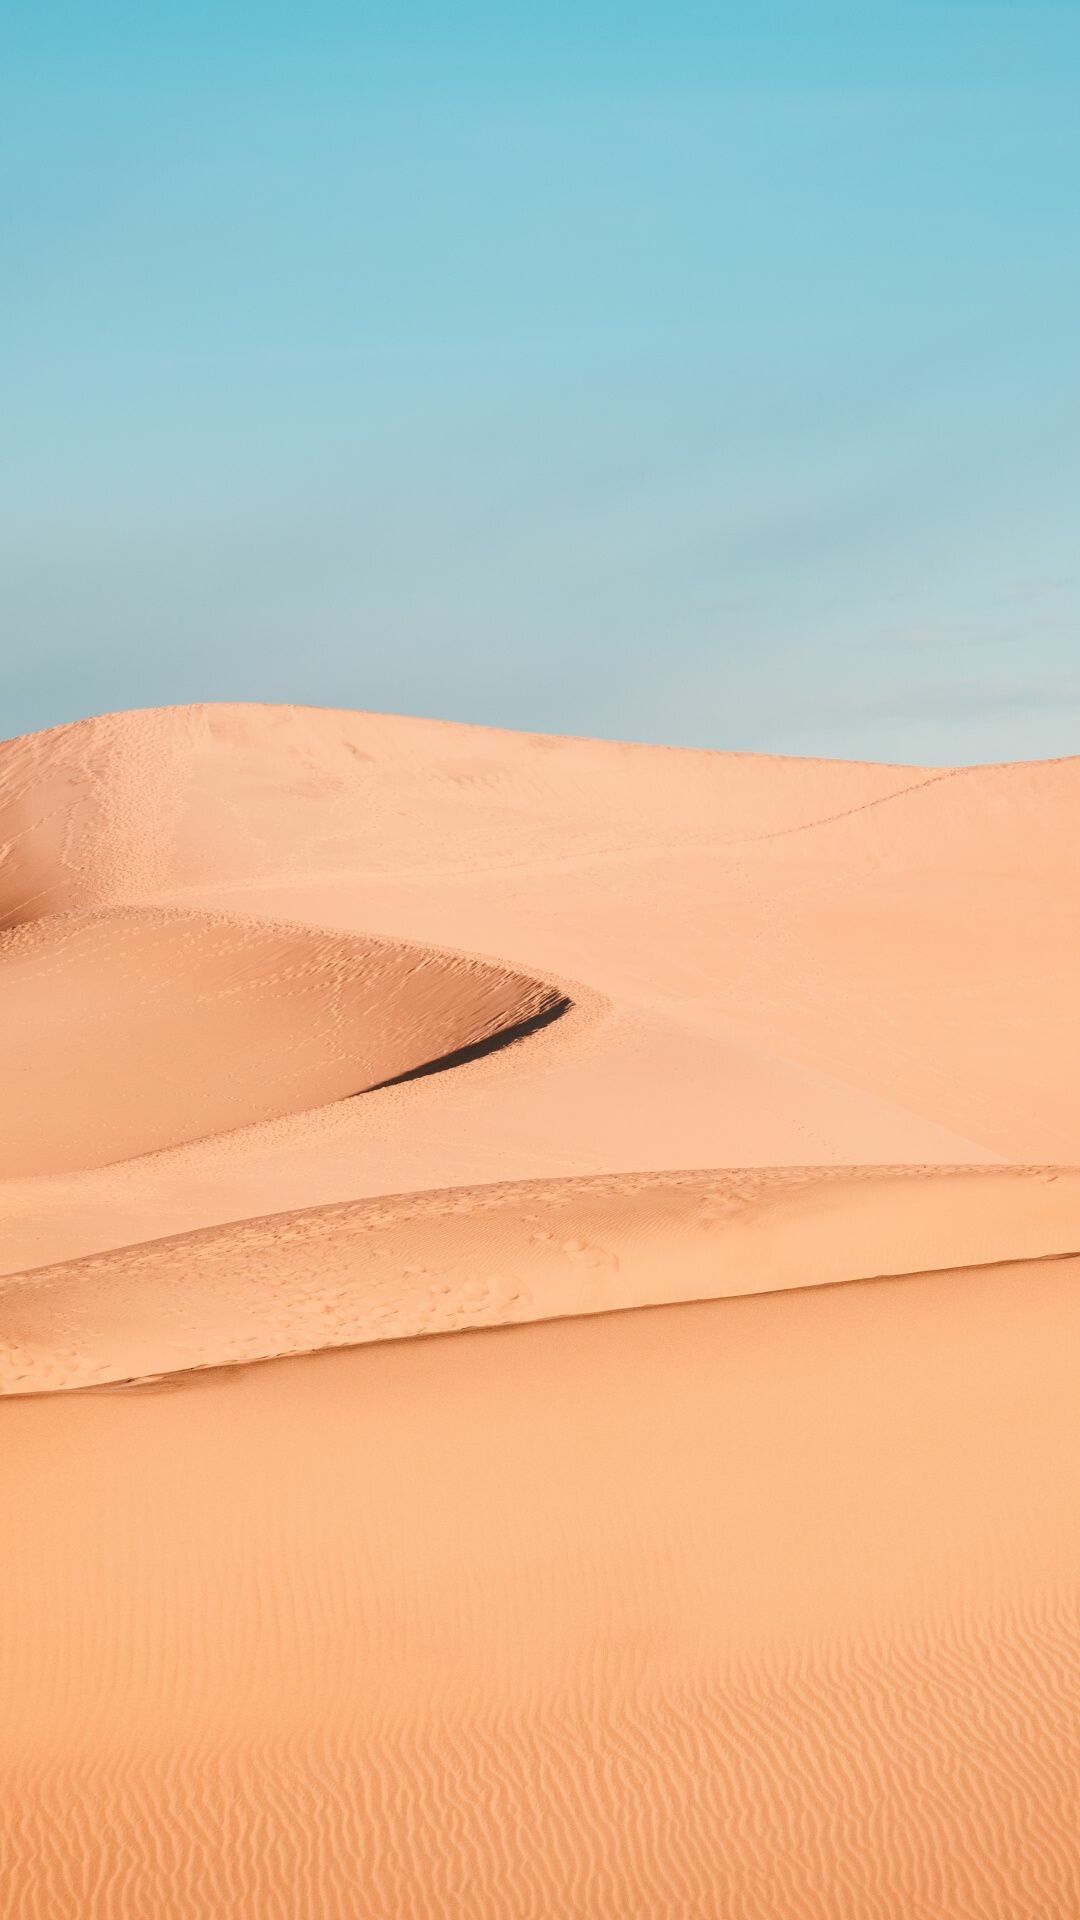 Desert: Dunes, Erg, Aeolian landform, Natural environment. 1080x1920 Full HD Background.